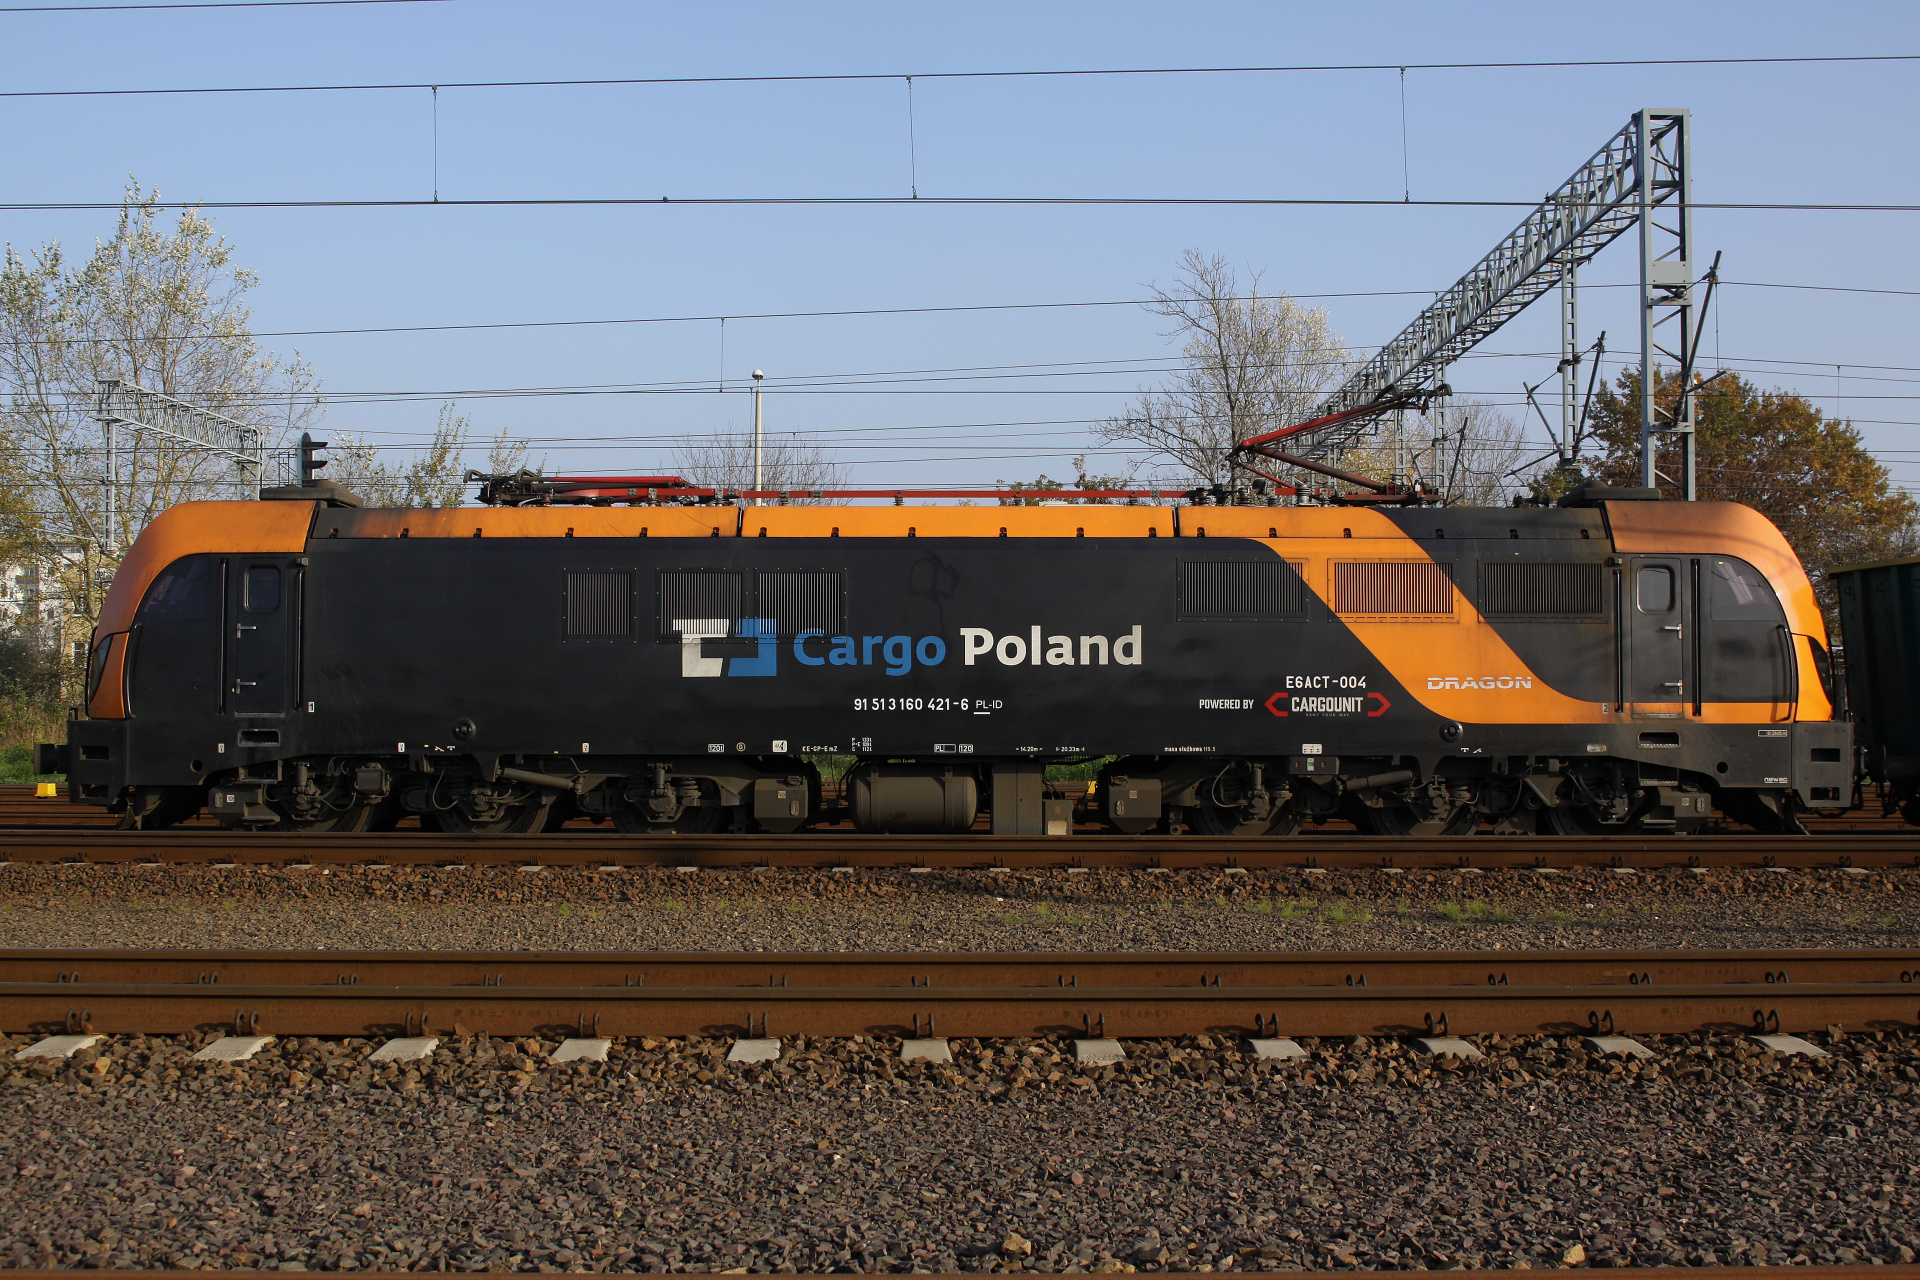 Newag E6ACT-004 Dragon (Vehicles » Trains and Locomotives)